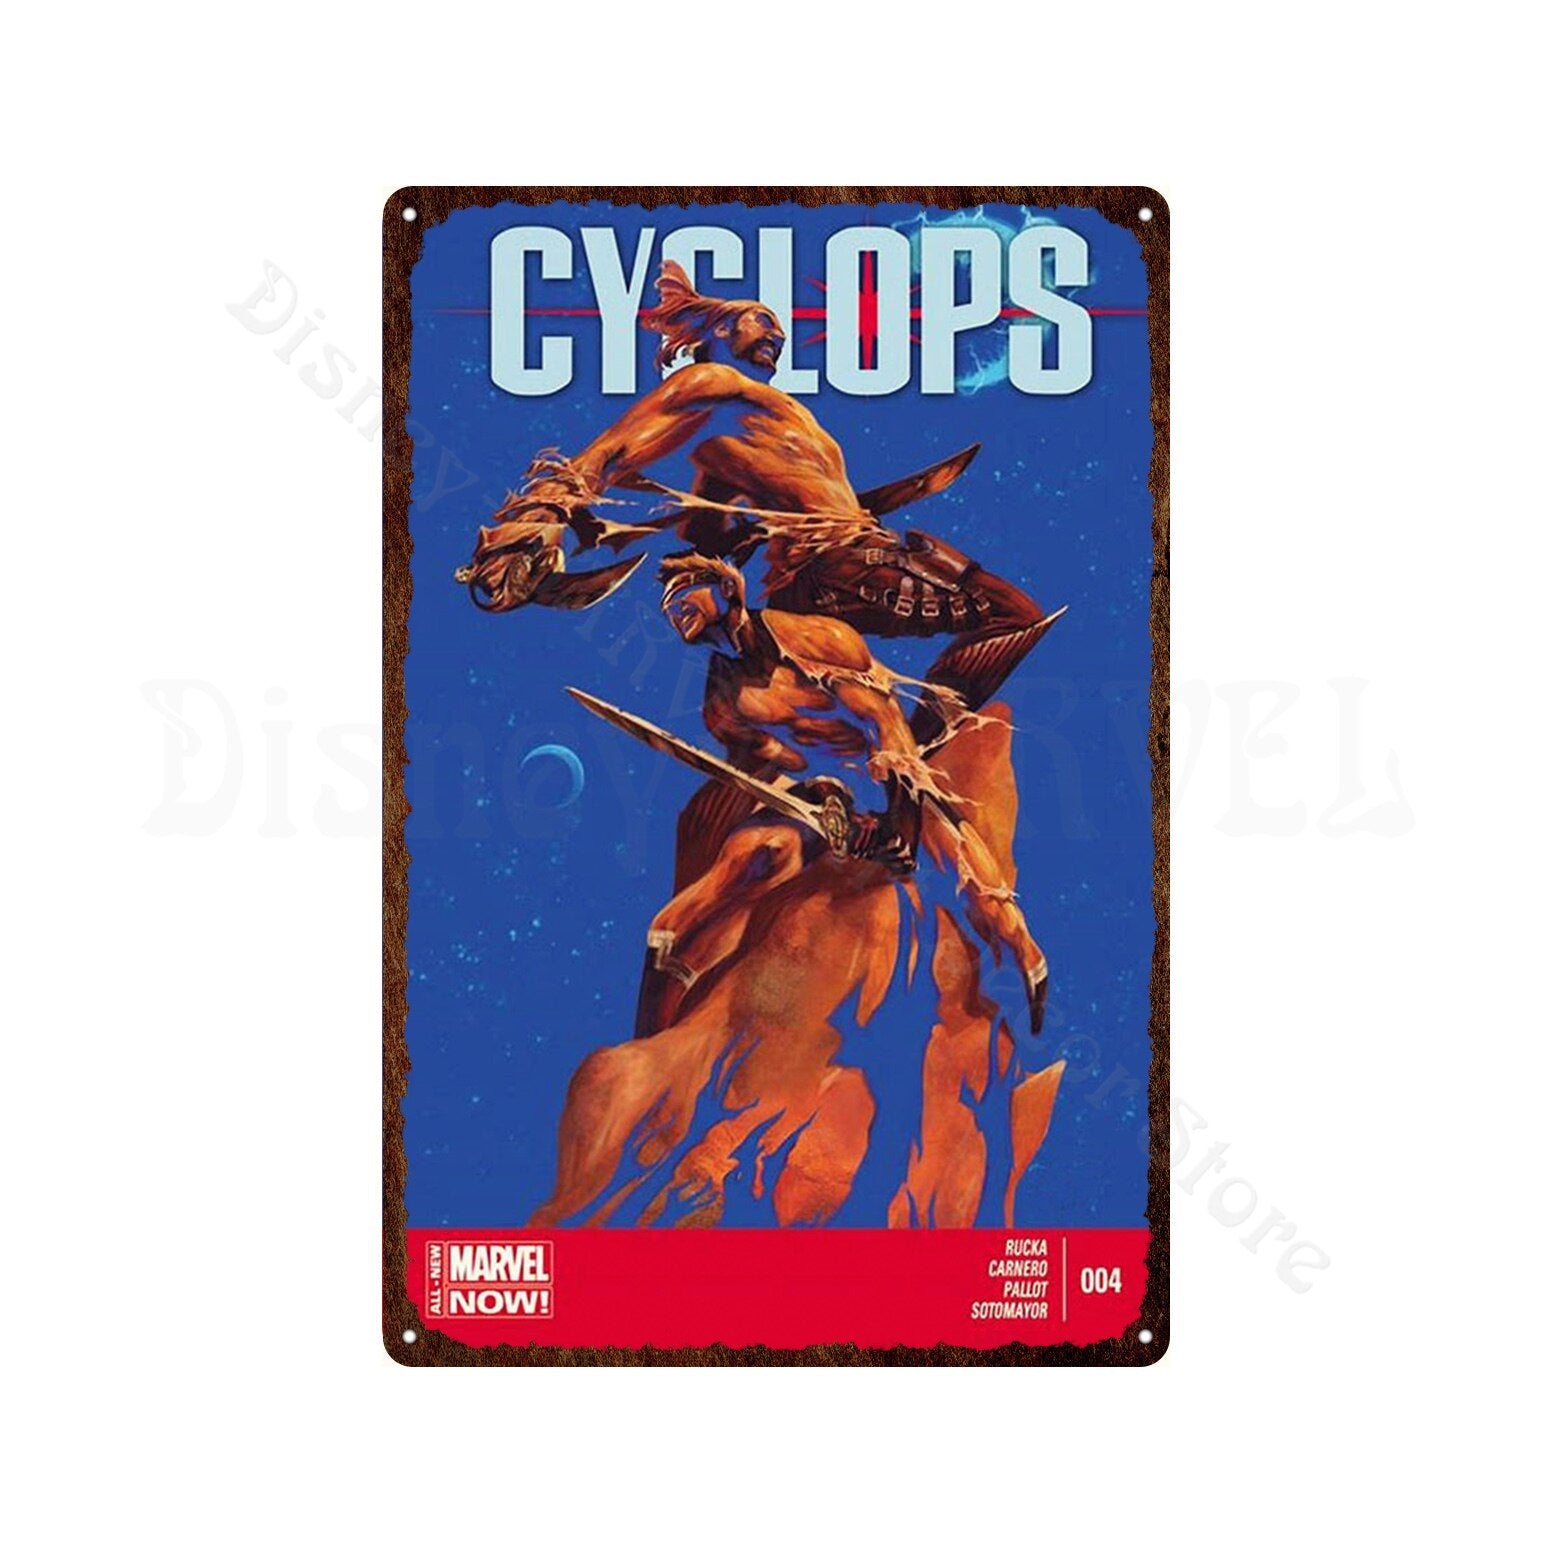 Poster Vintage Cyclops